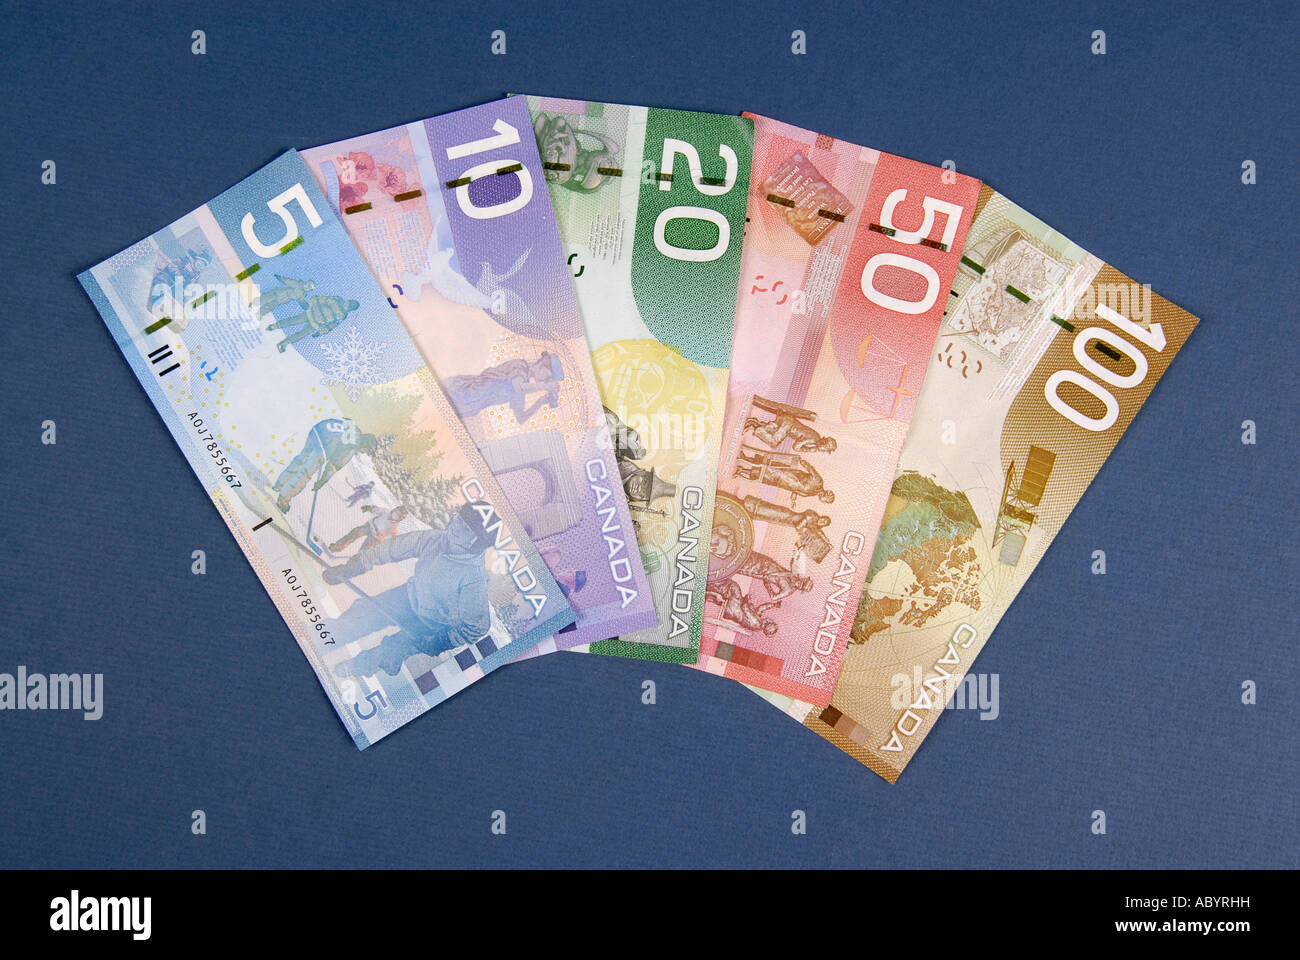 5 Five Ten 10 Twenty 20 Fifty 50 One hundred 100 Canadian Canada cash money dollar bills Stock Photo